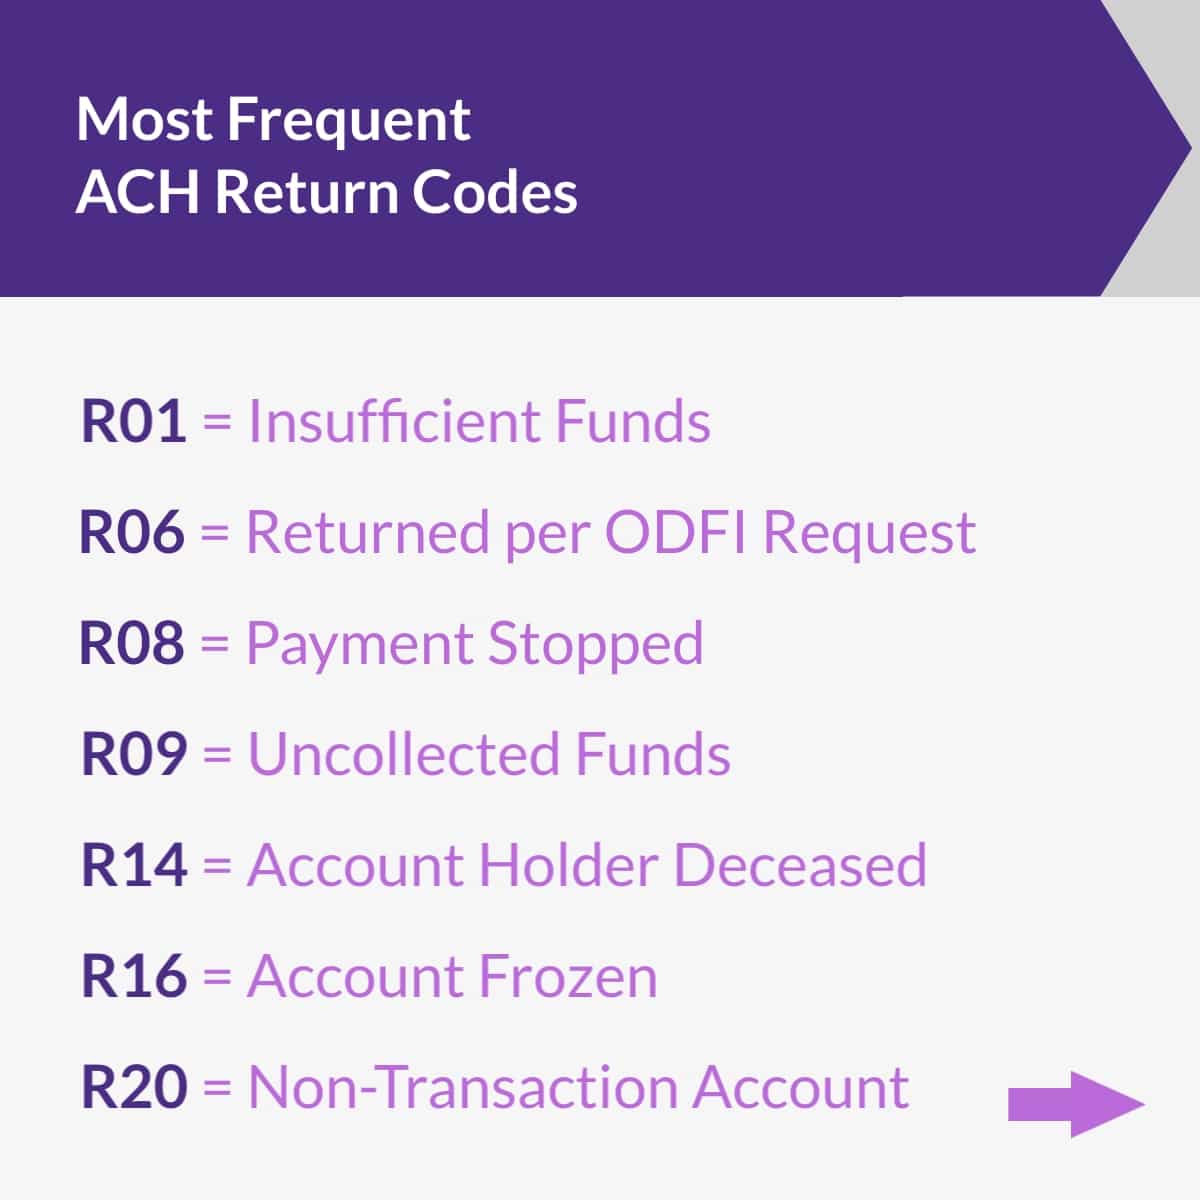 Most Frequent ACH Return Codes